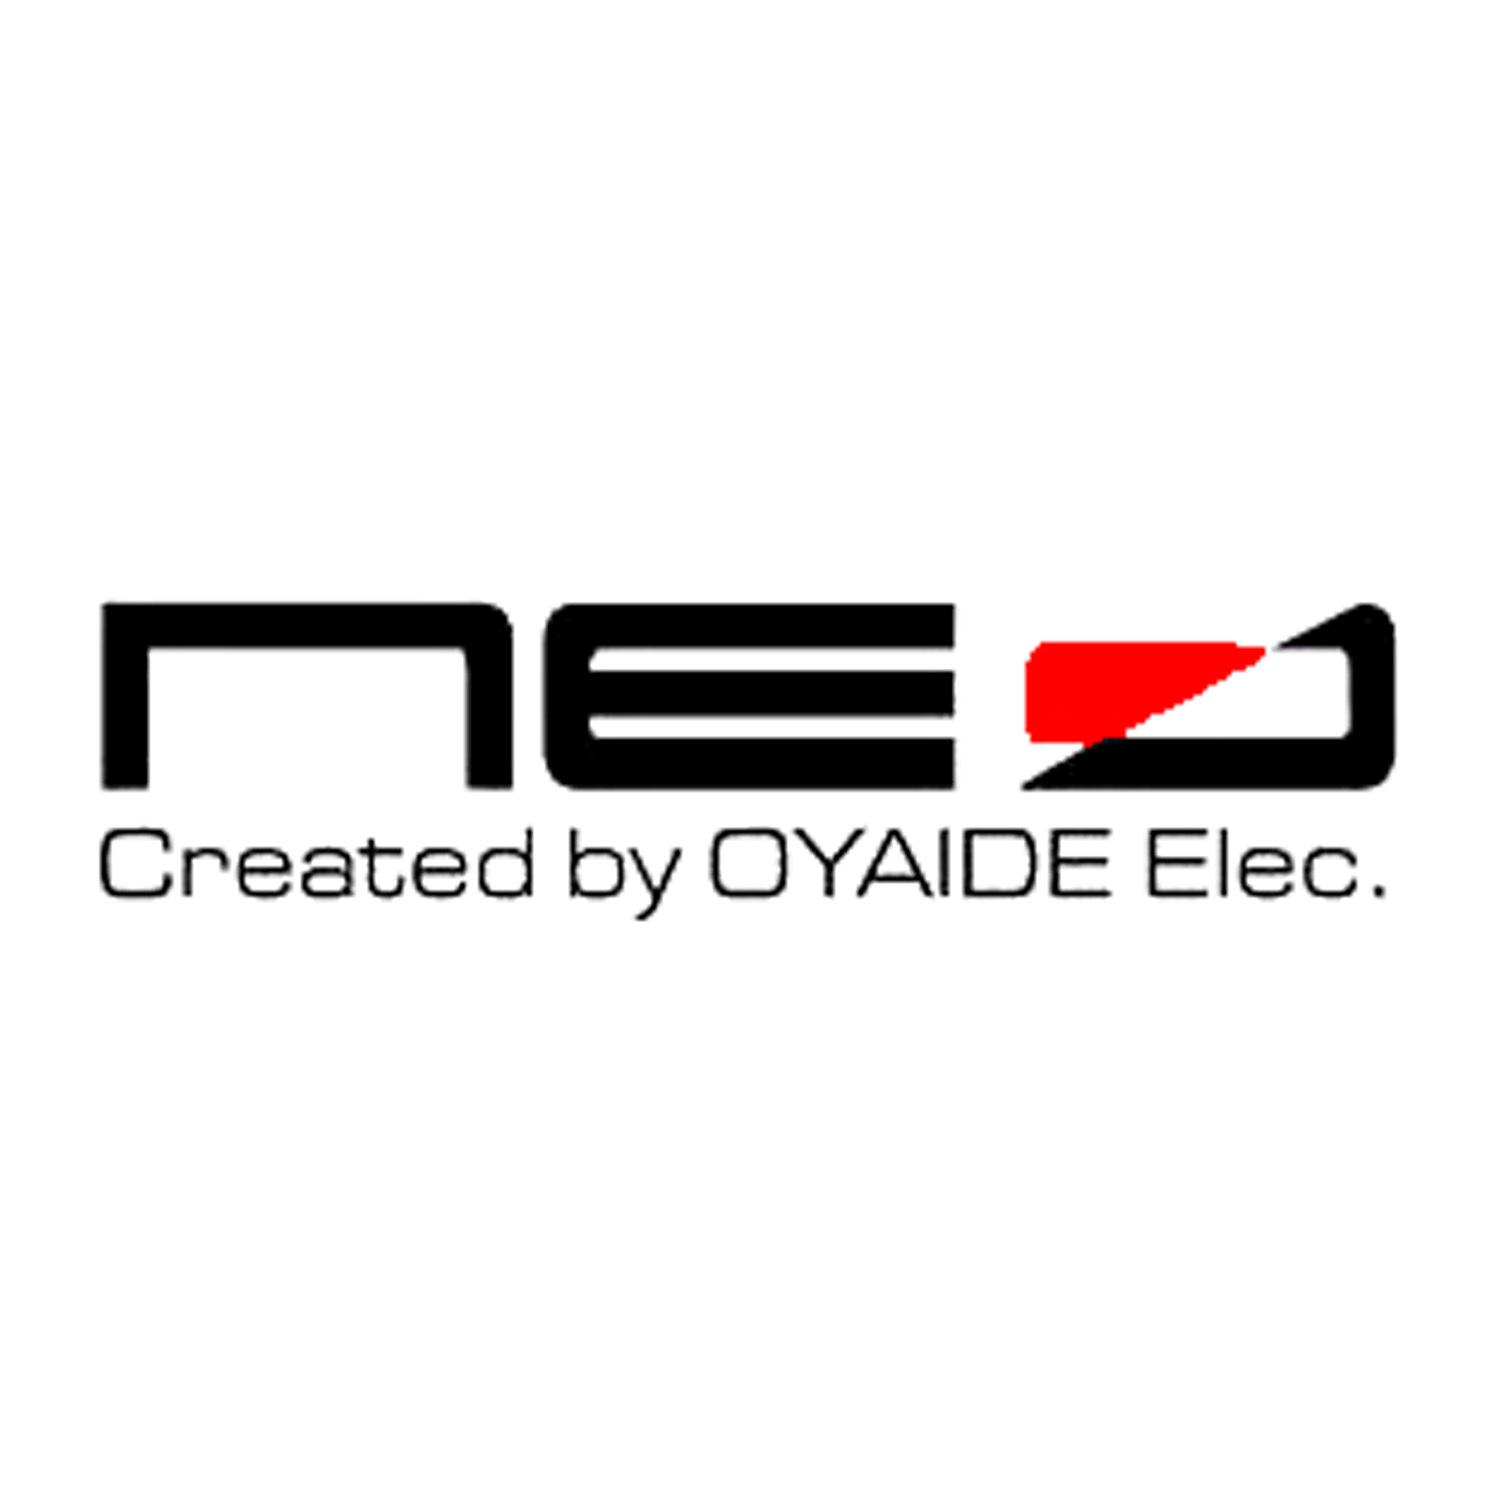 Neo/Oyaide